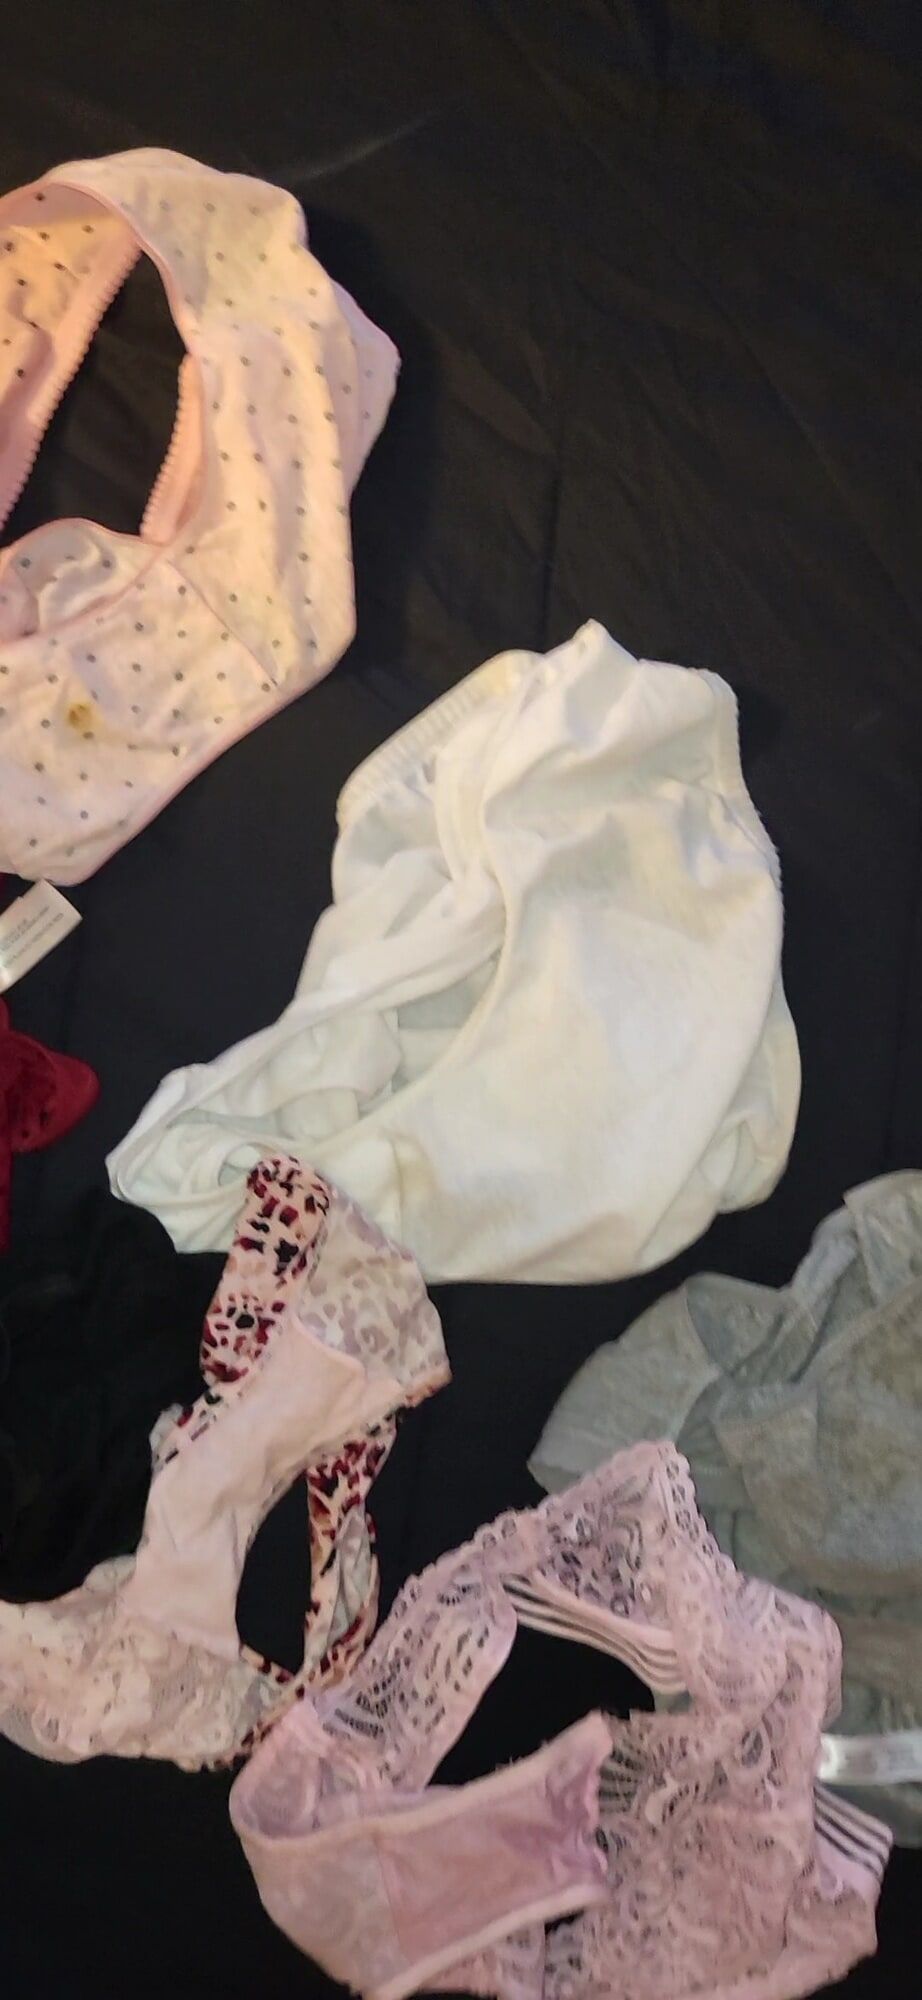 Wife's Dirty Panties Laundry Bag #10